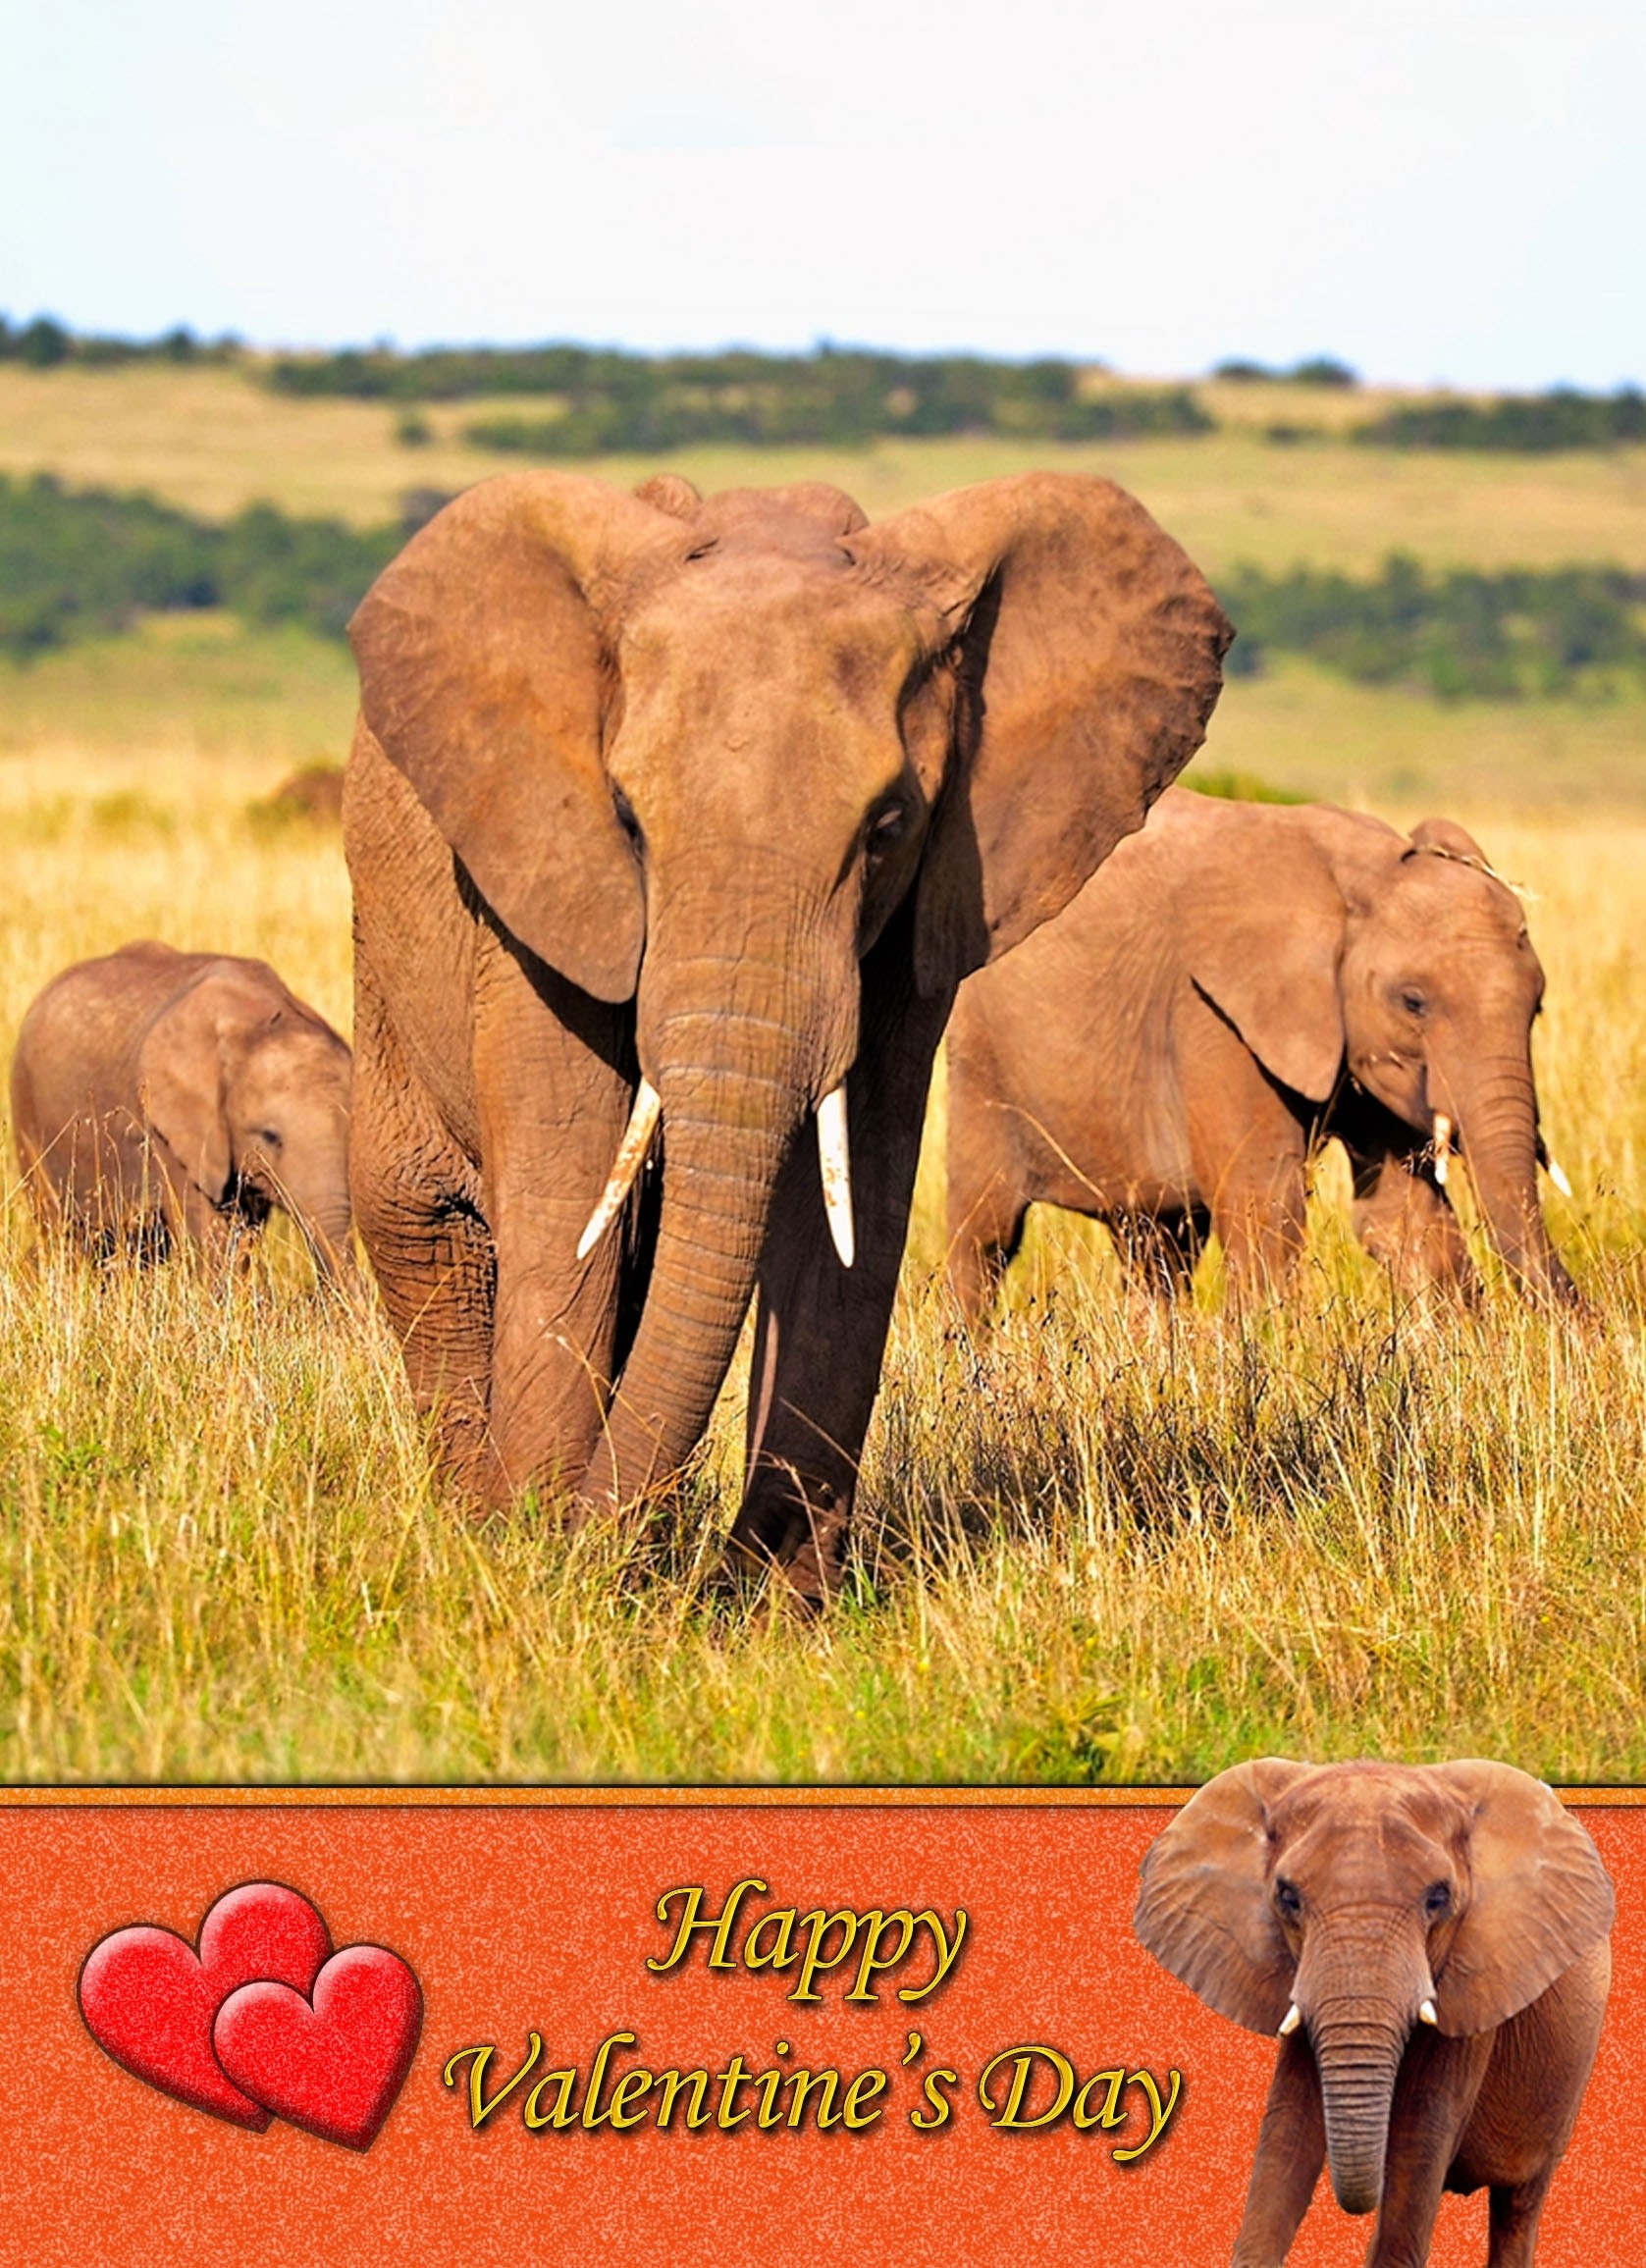 Elephant Valentine's Day Card